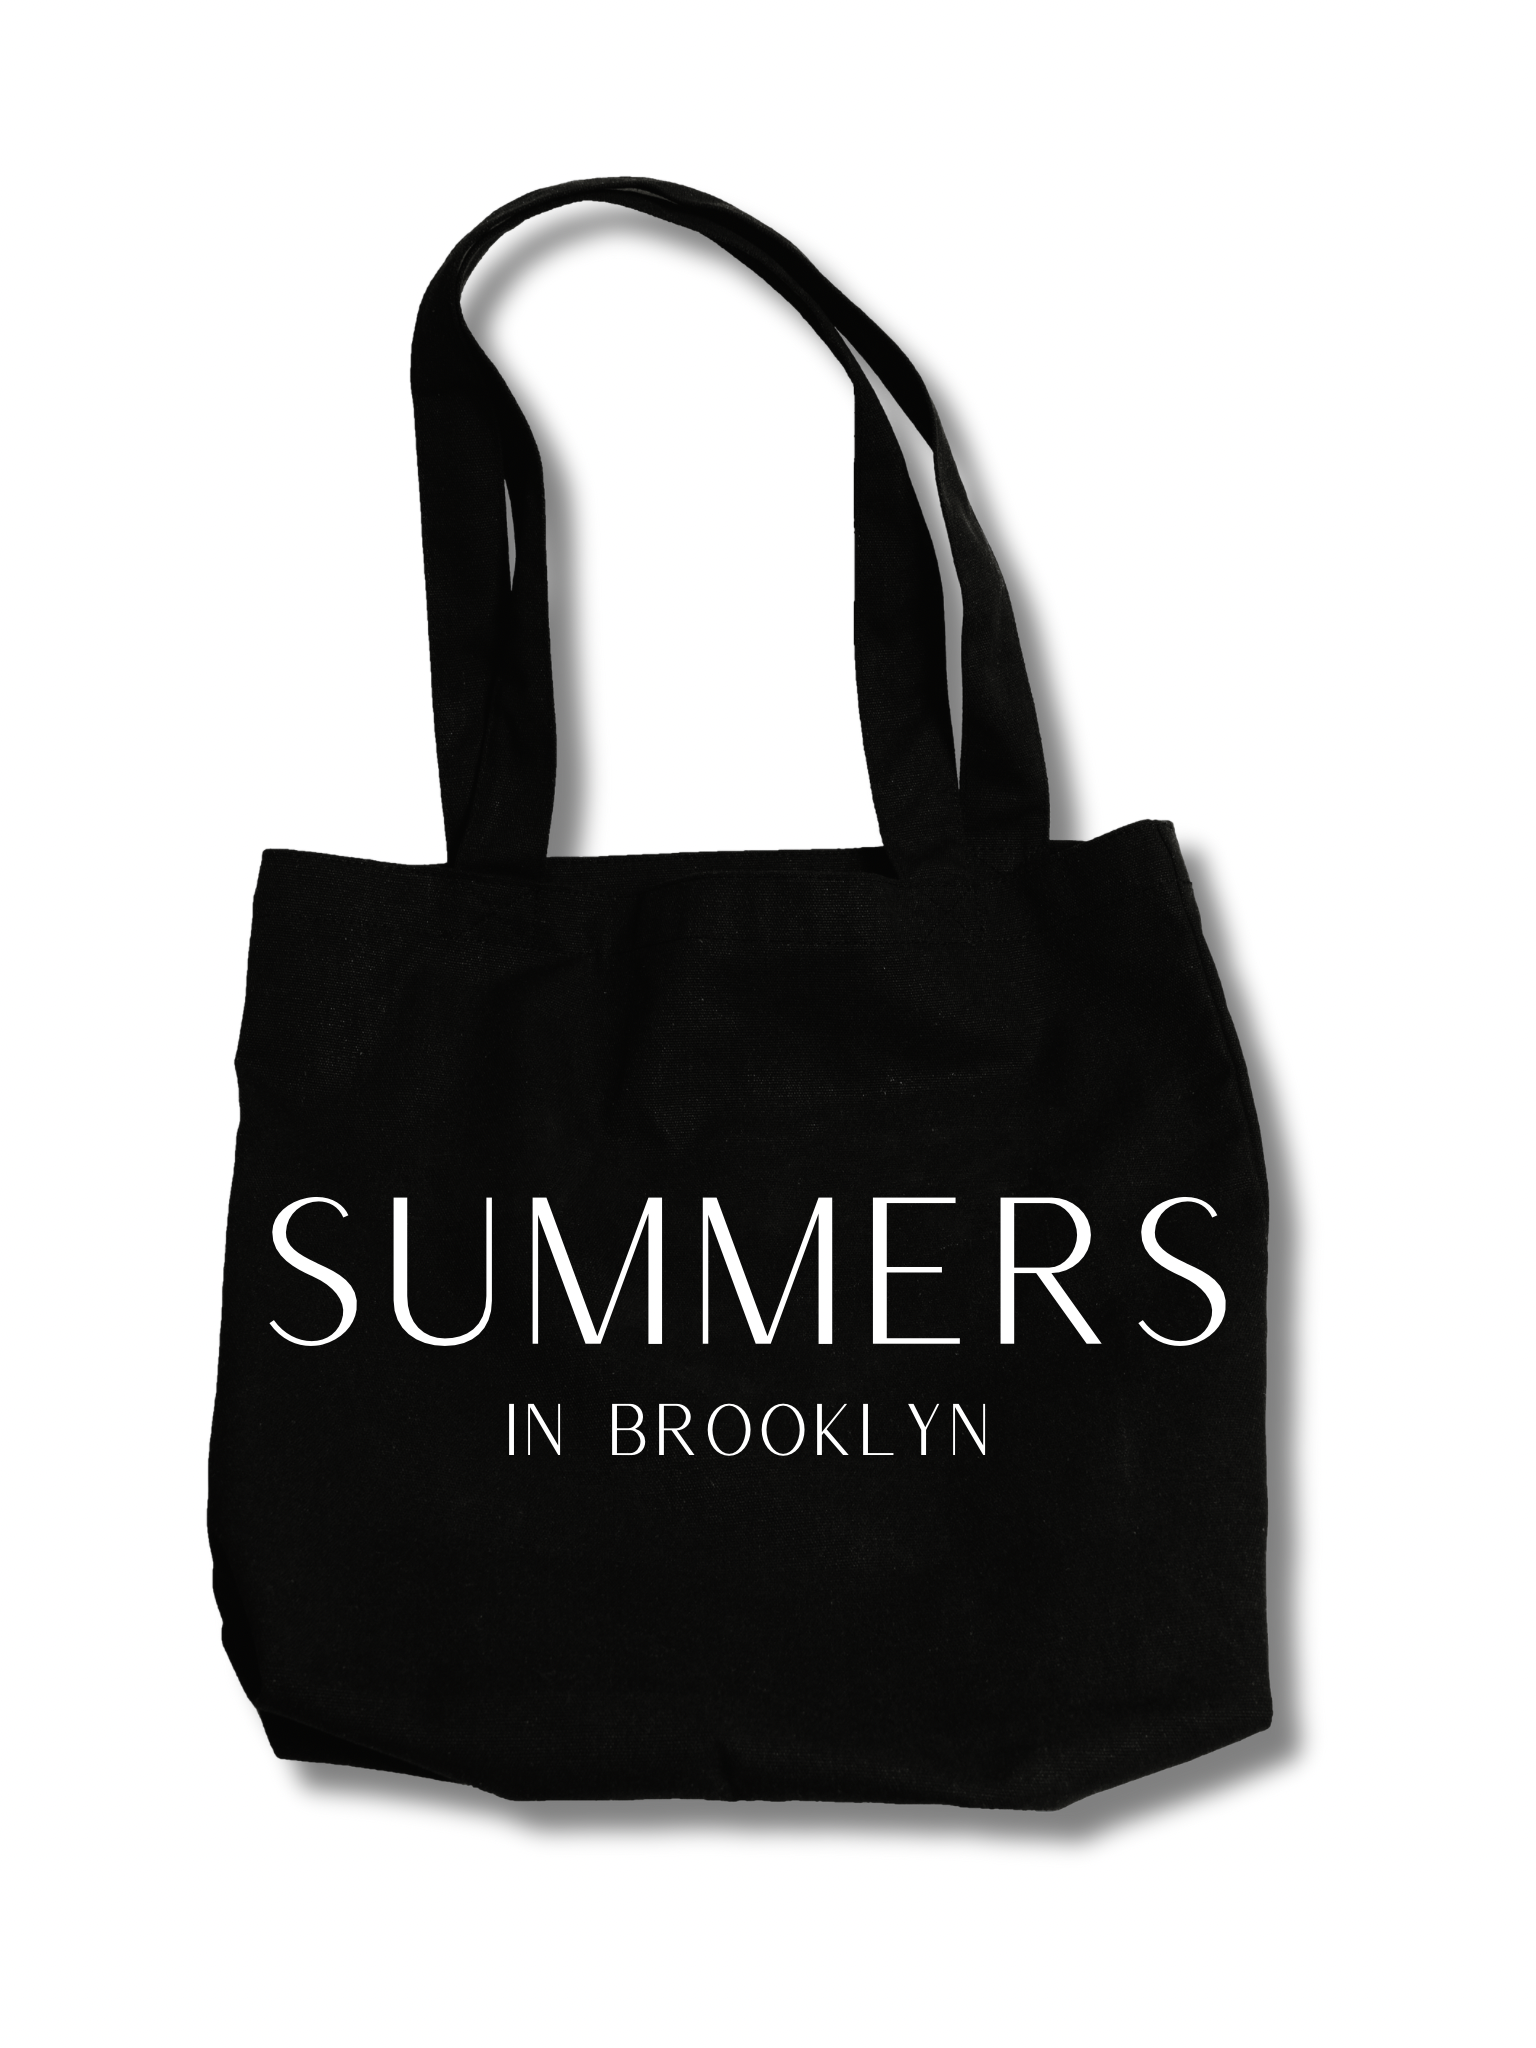 Summers in Brooklyn Tote